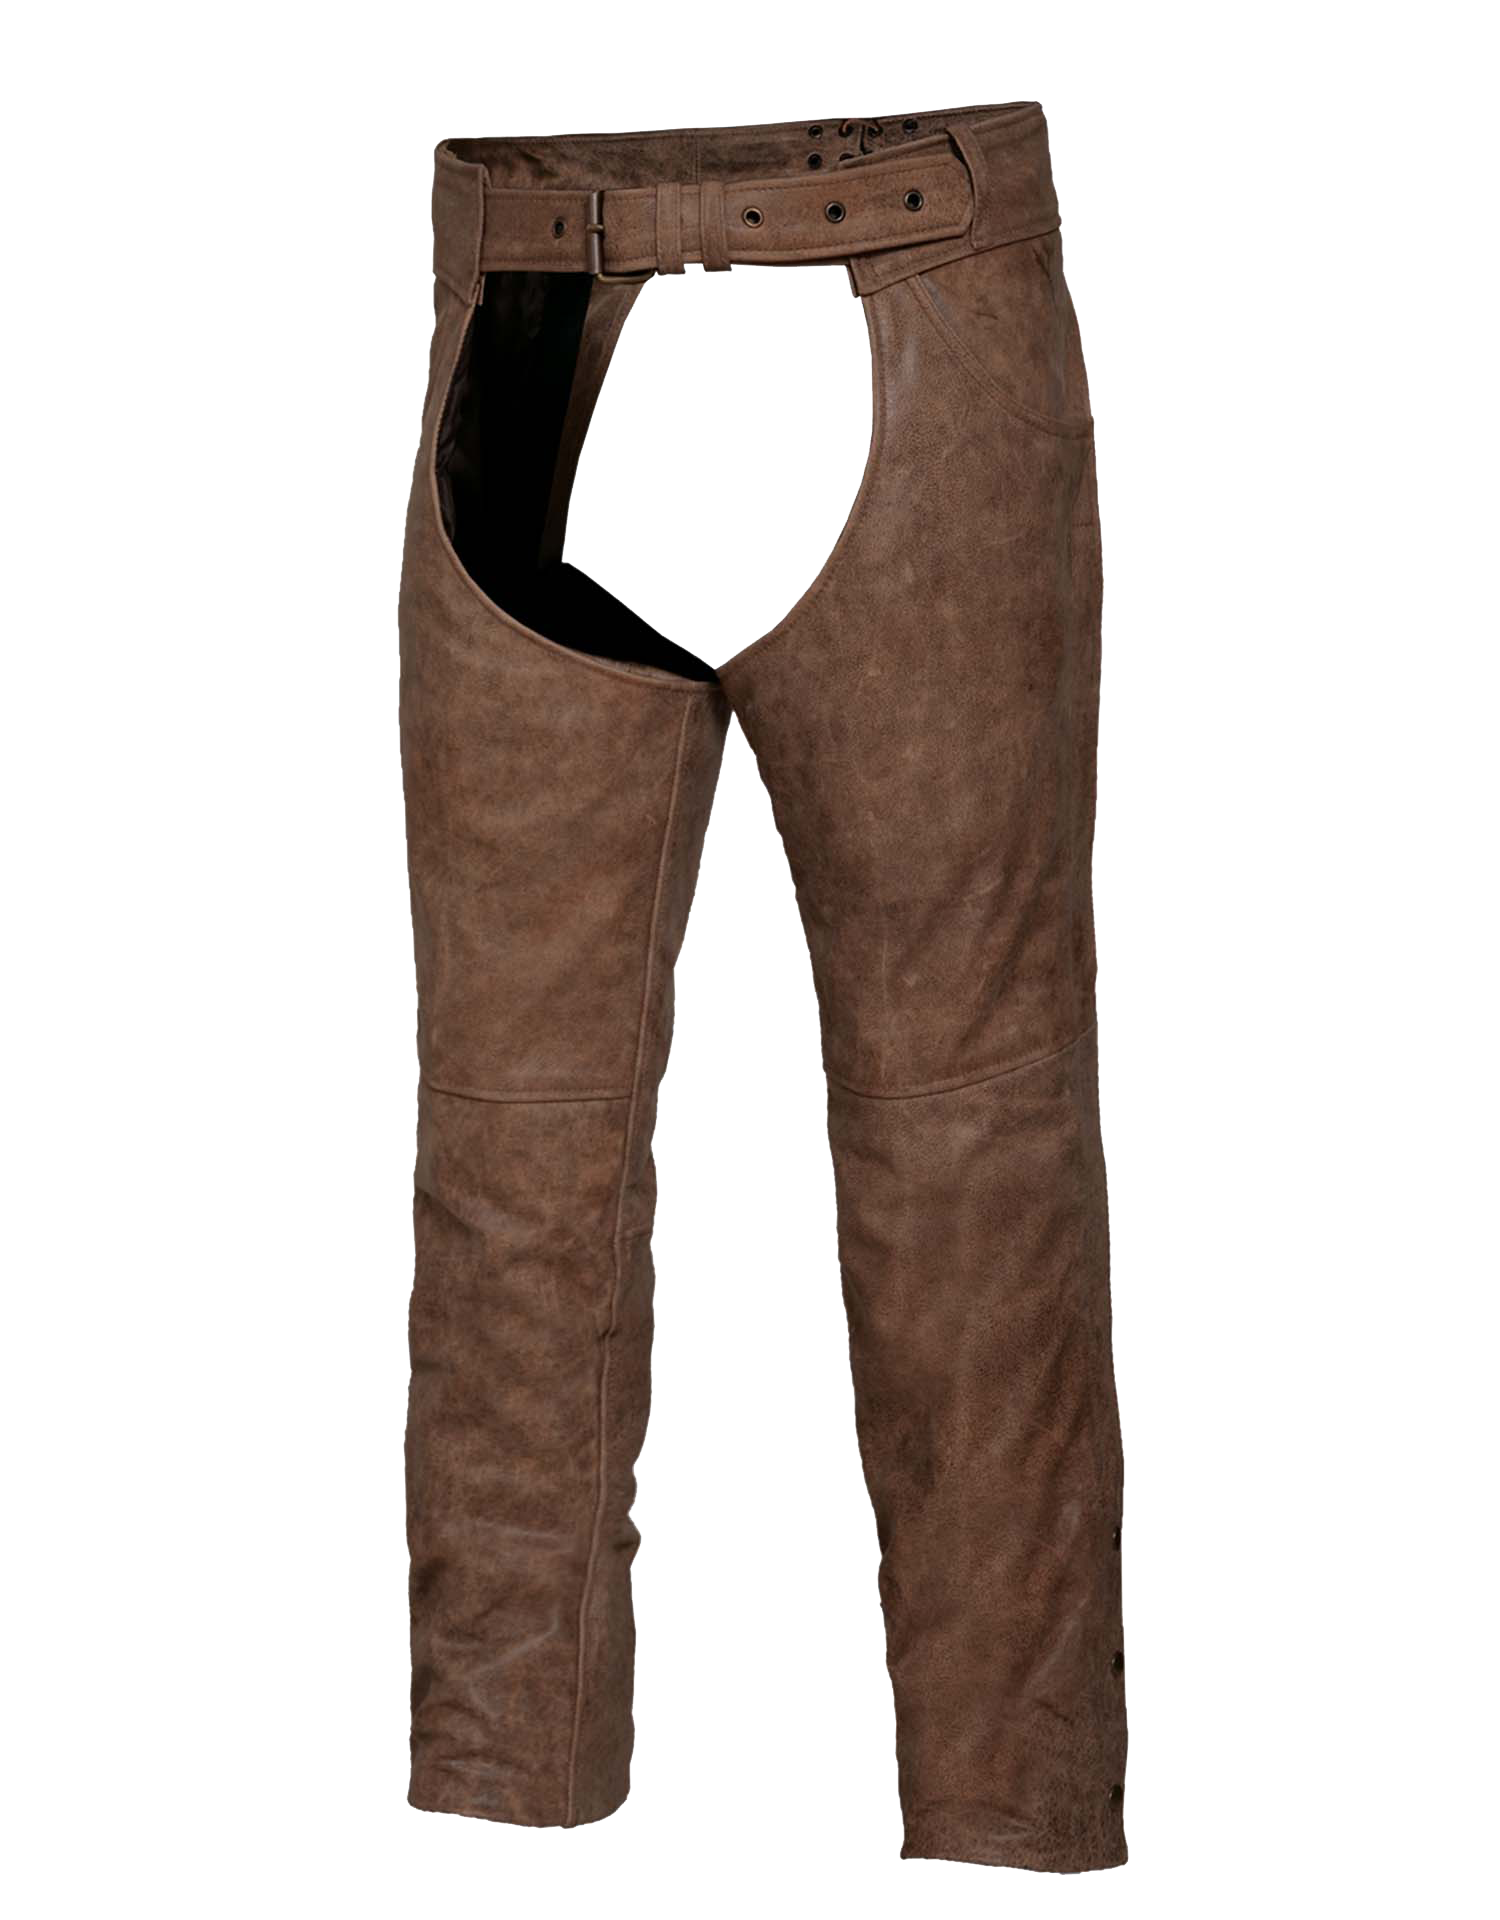 Unik International Mens Brown jean Pocket Leather Chaps